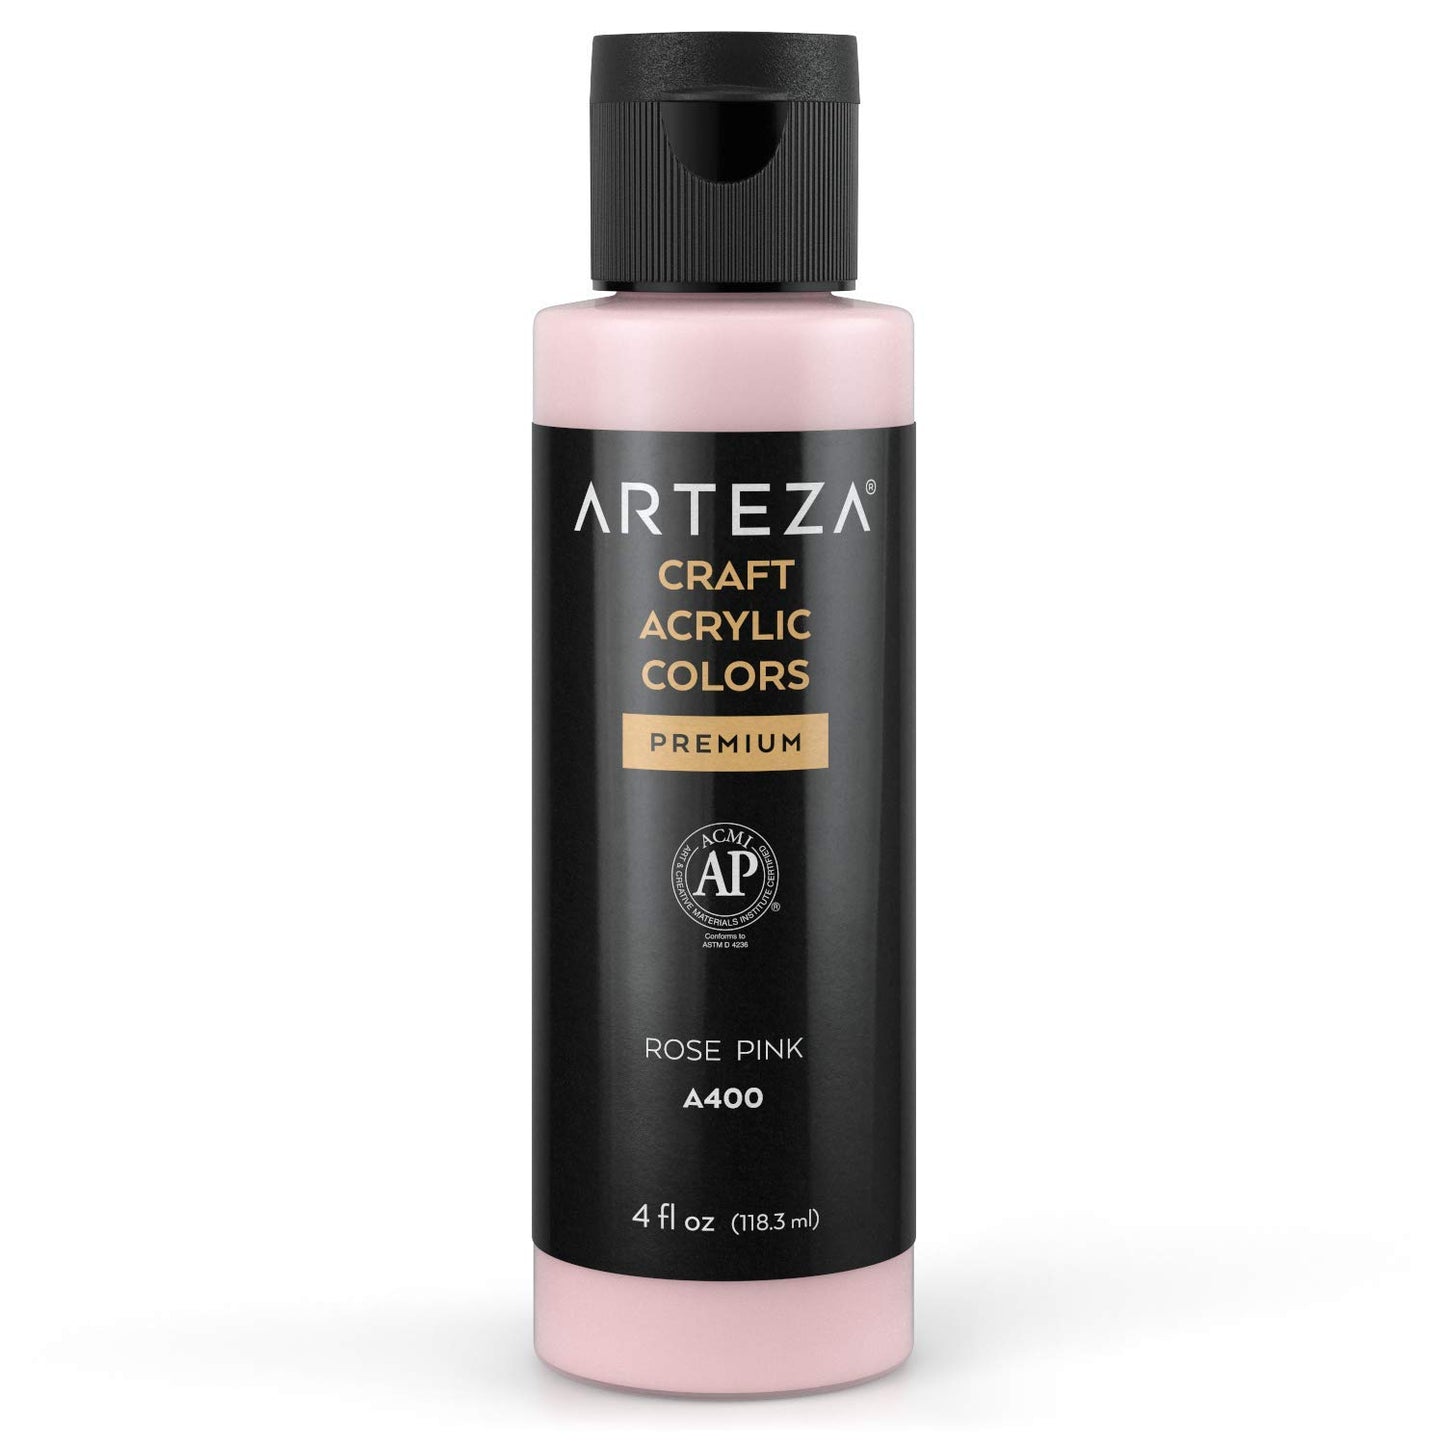 Arteza Craft Acrylic Paint, 4oz Bottle - A400 Rose Pink